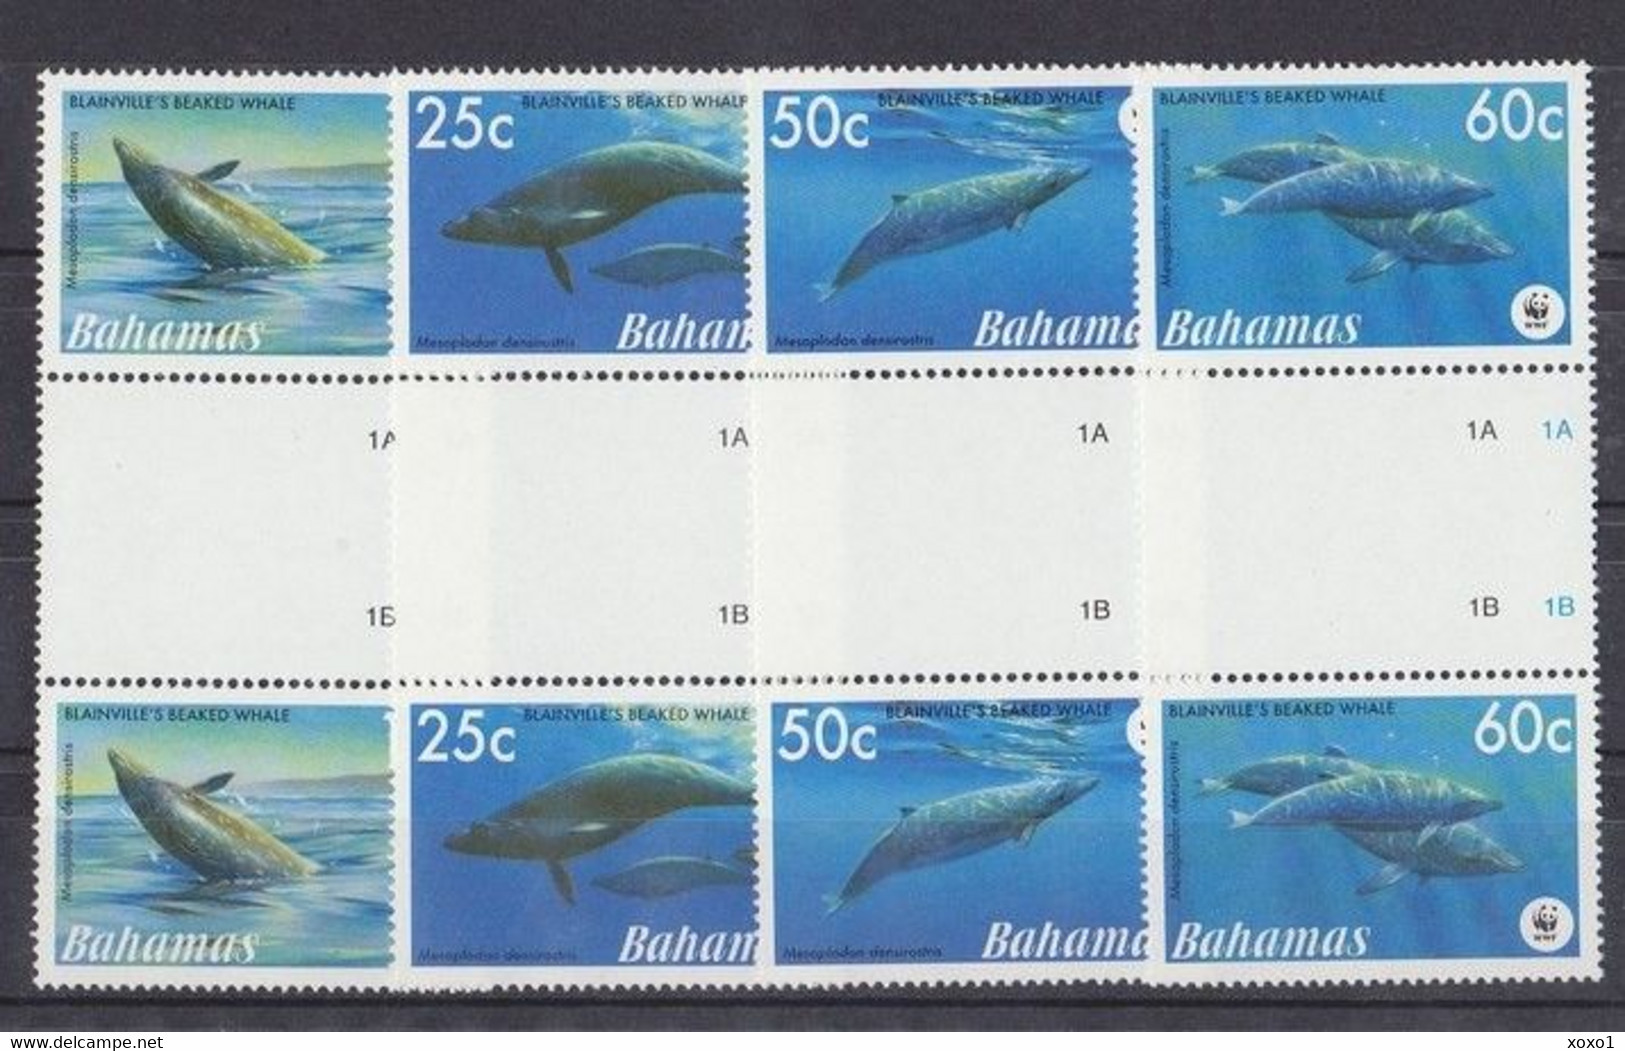 Bahamas 2007 MiNr. 1281 - 1284 WWF Marine Mammals Blainville's Beaked Whales Gutter Pair 8v MNH** 7.20 € - Ongebruikt